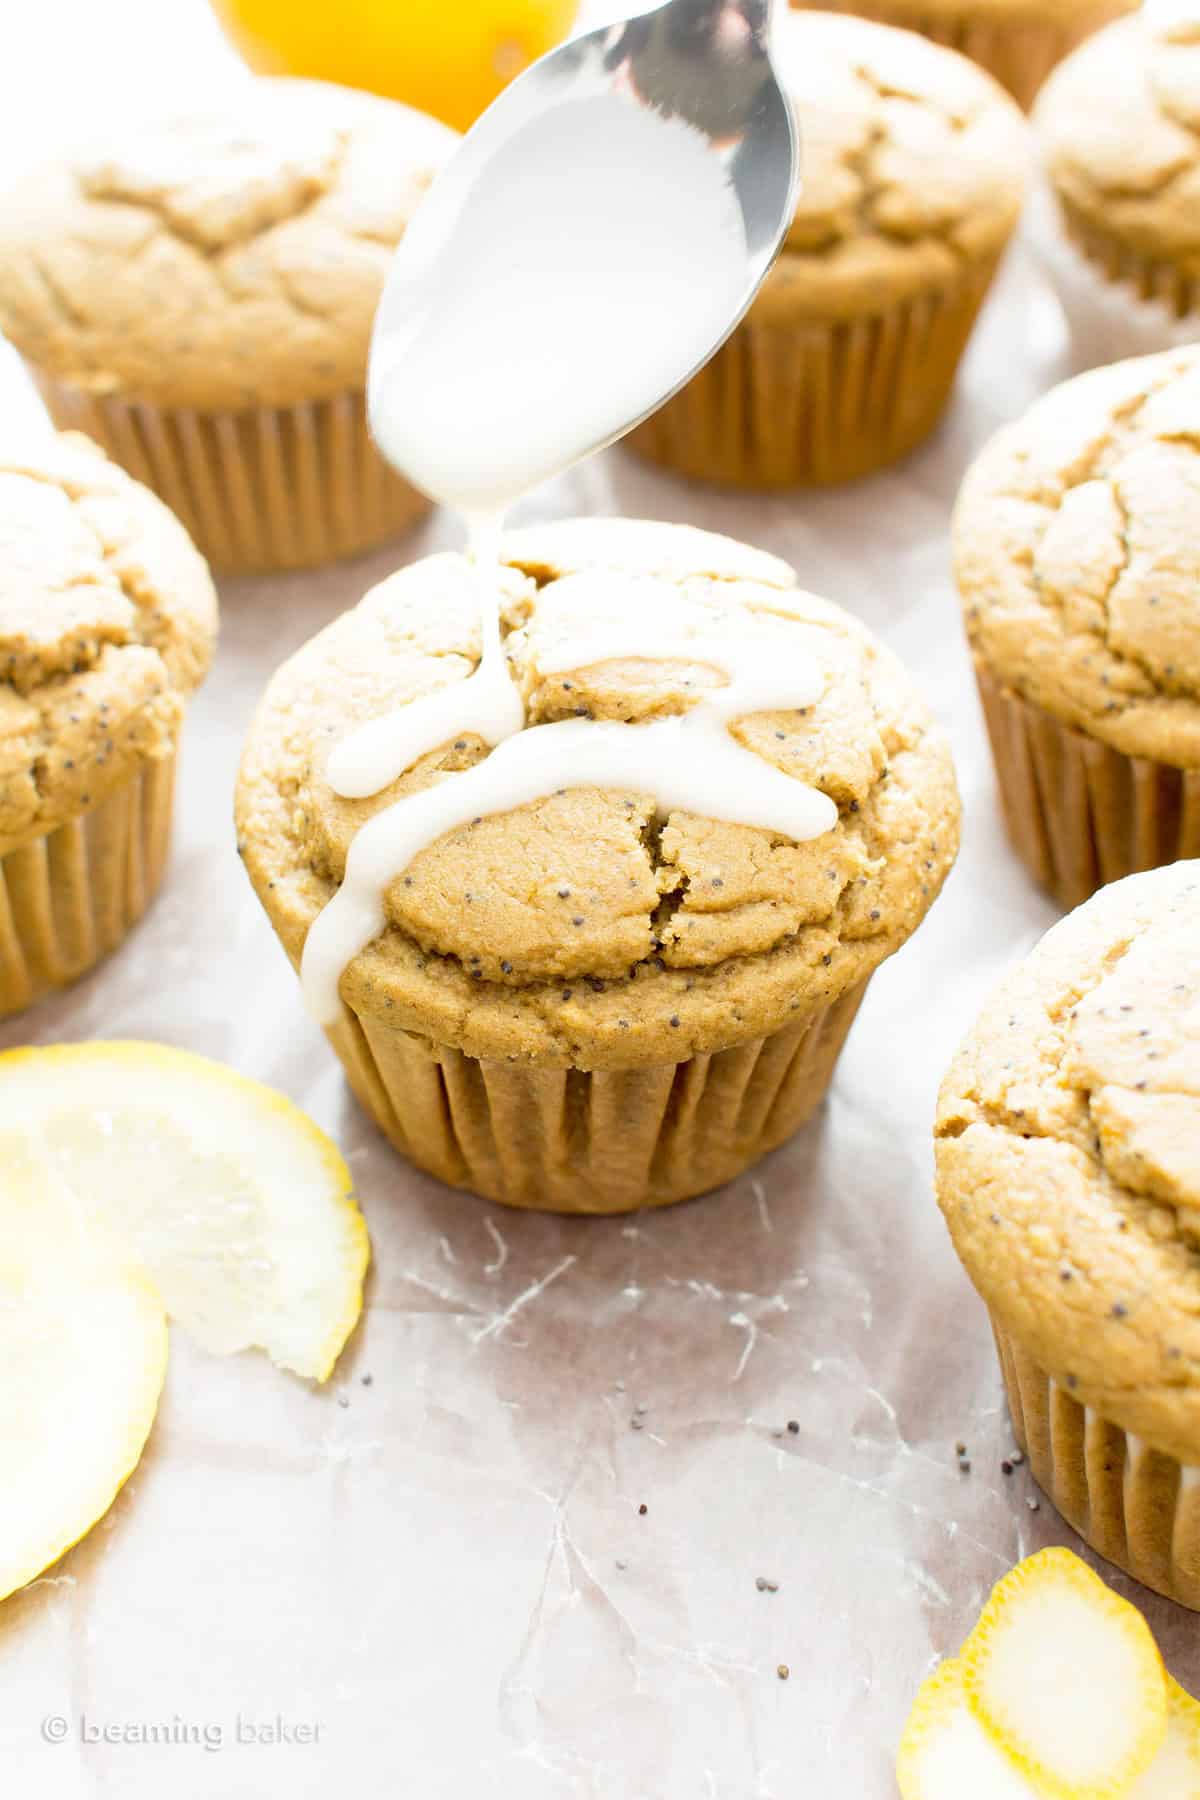 Spooning lemon glaze onto muffins